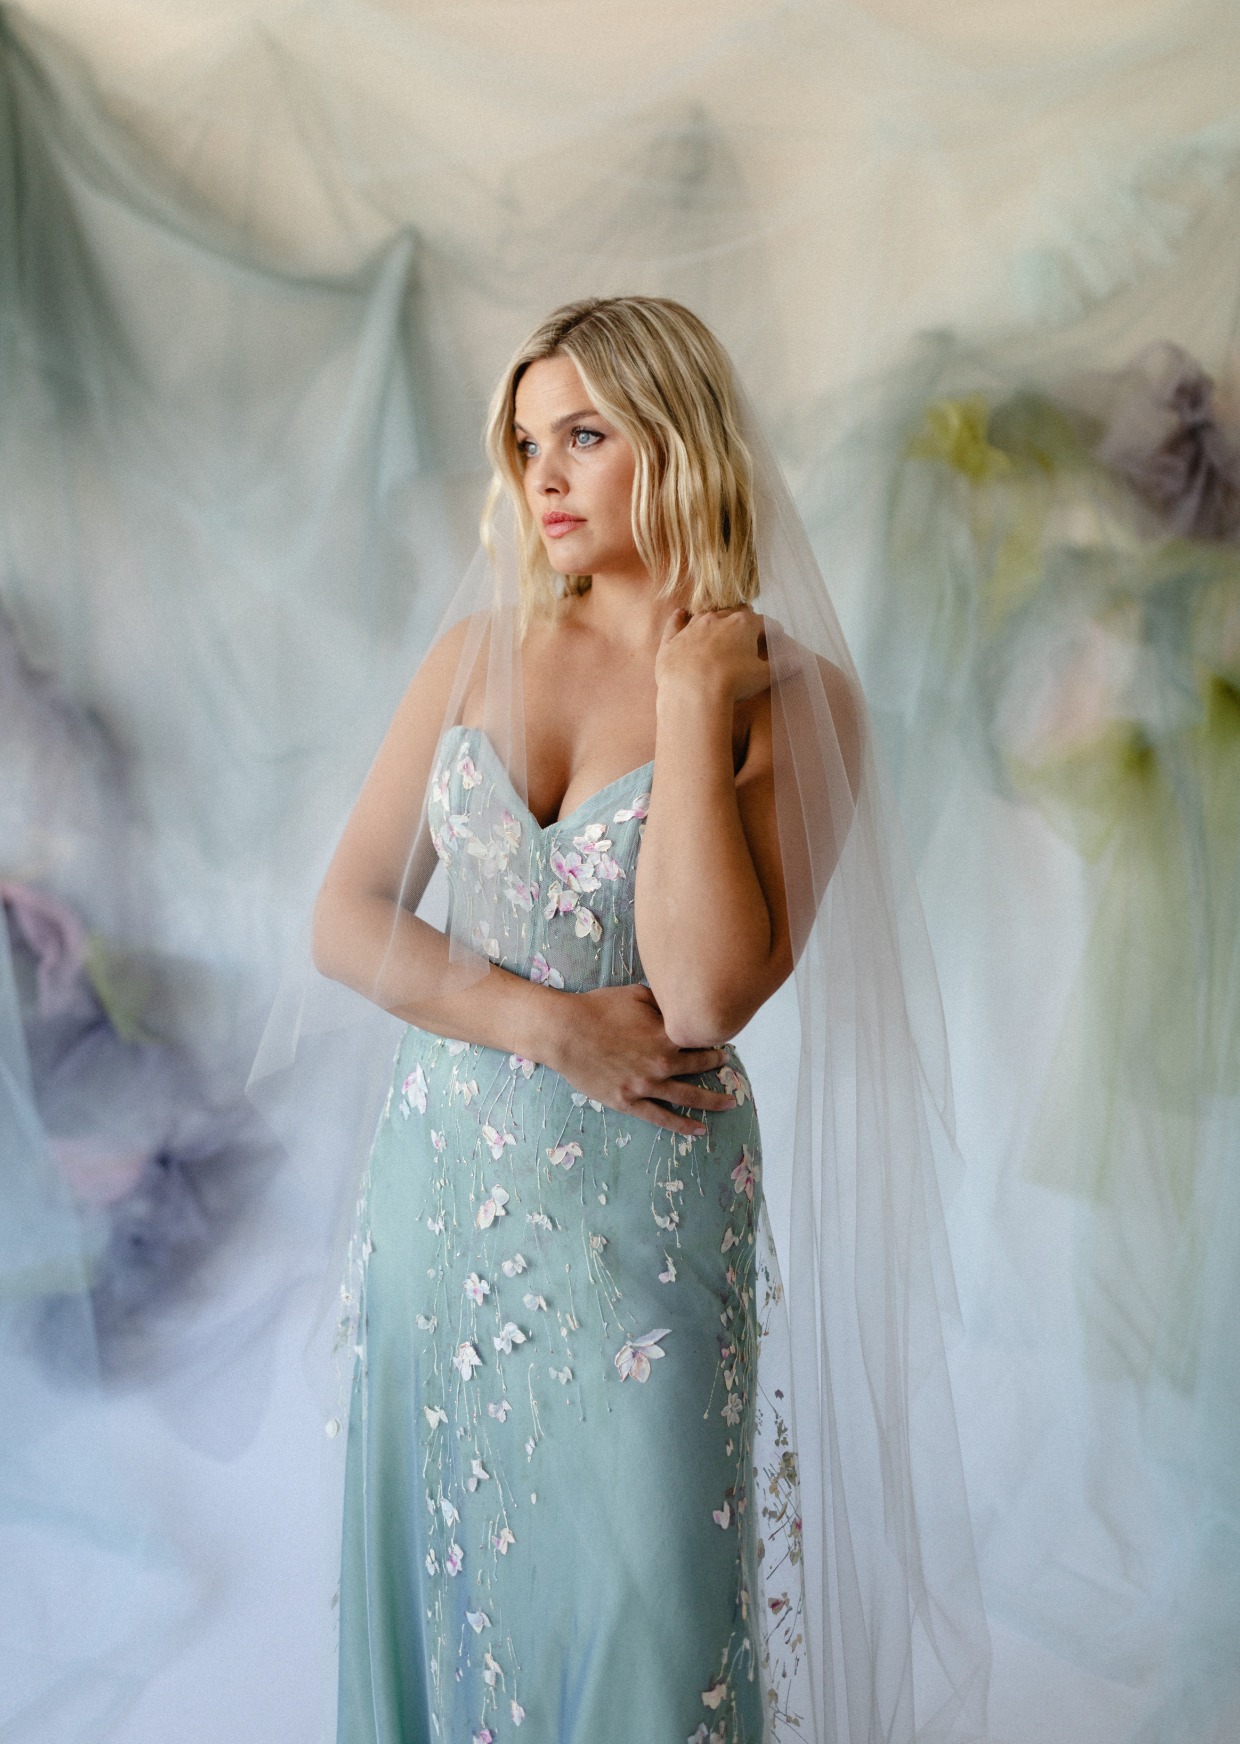 Monet sage and lace wedding dress by Carol Hannah